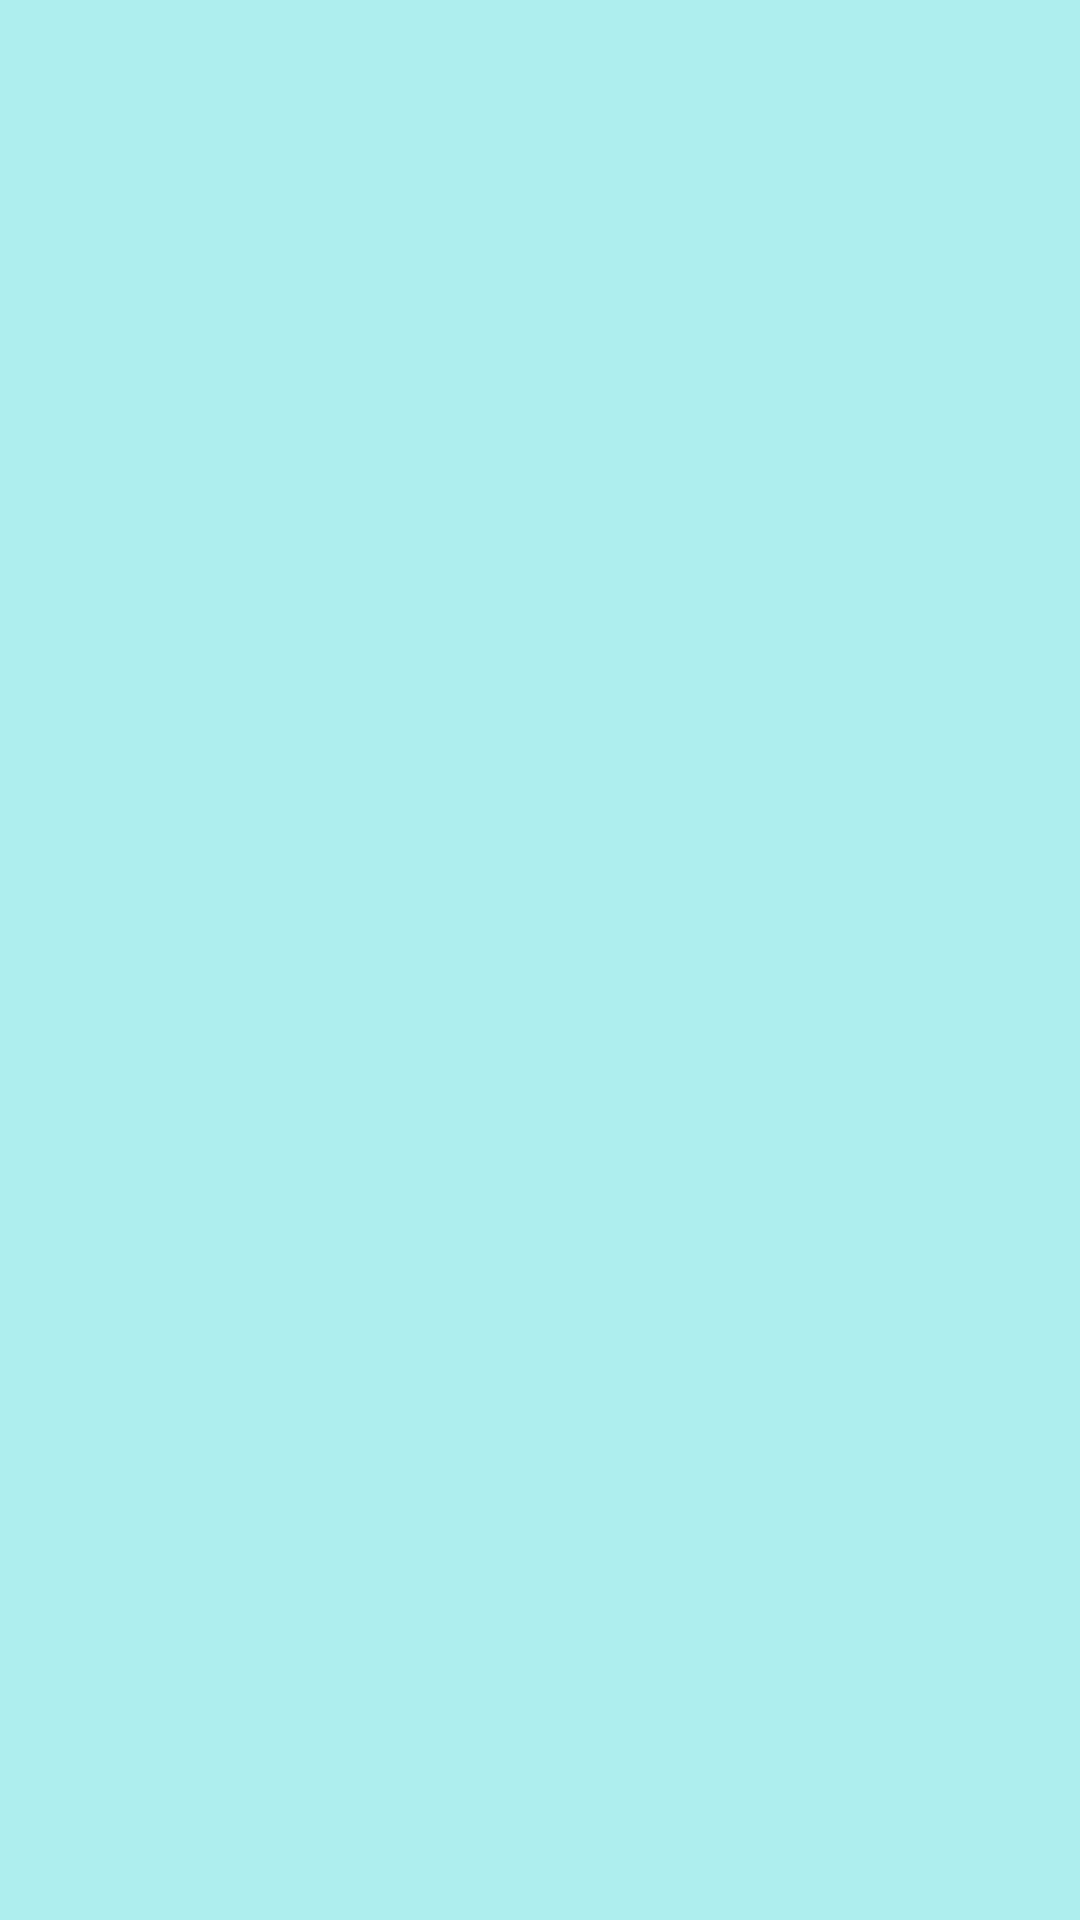 1080x1920 Pale Blue Solid Color Background